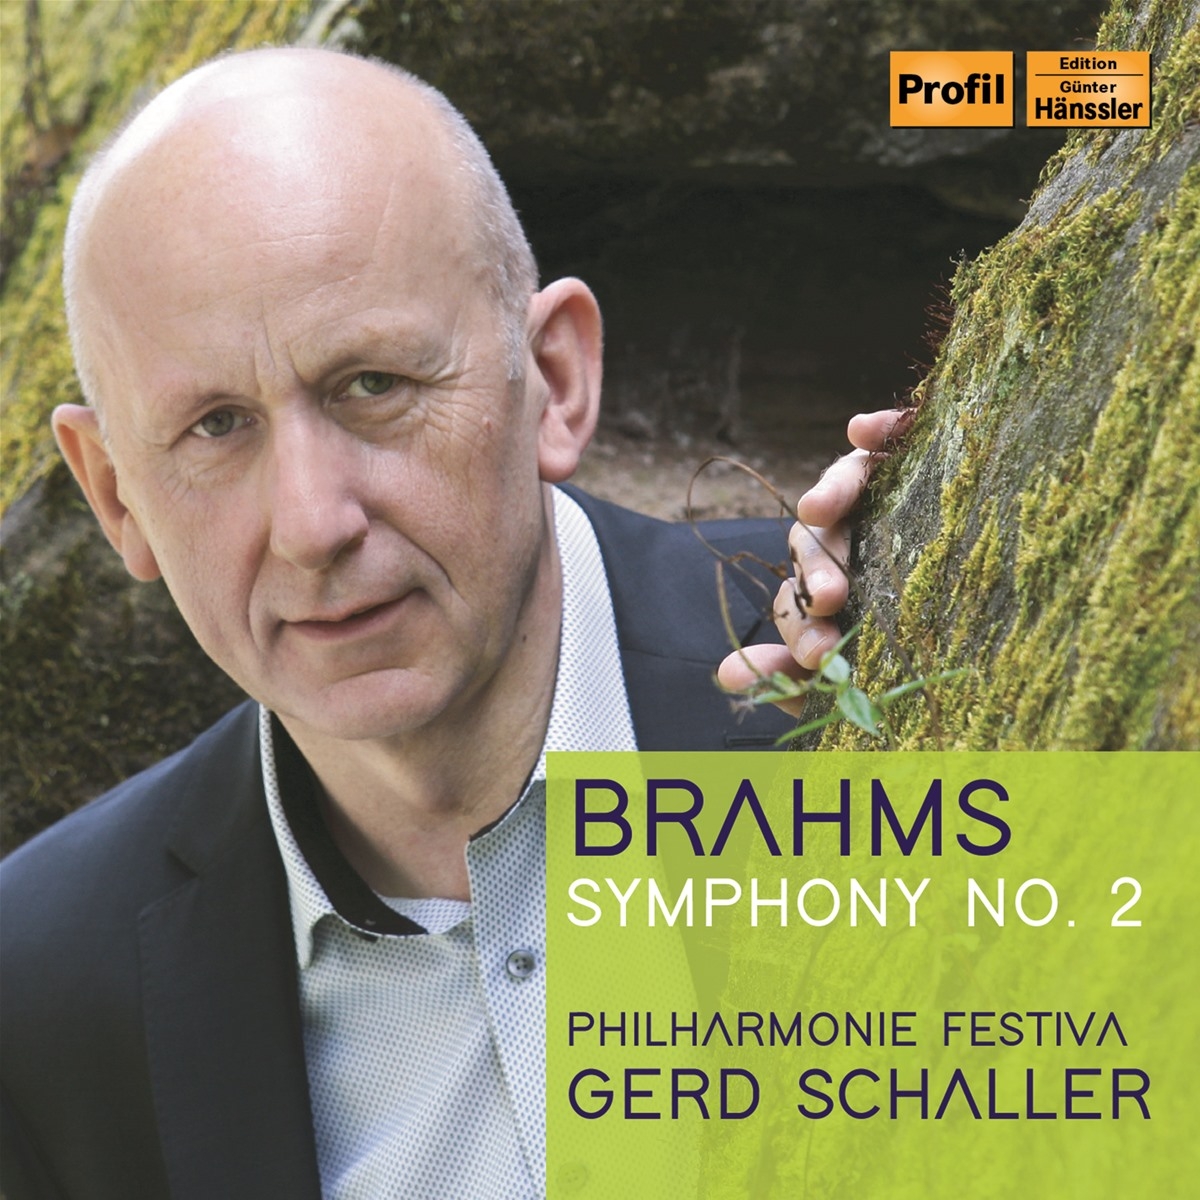 Brahms Sinfonie 2 in D Major-live recording